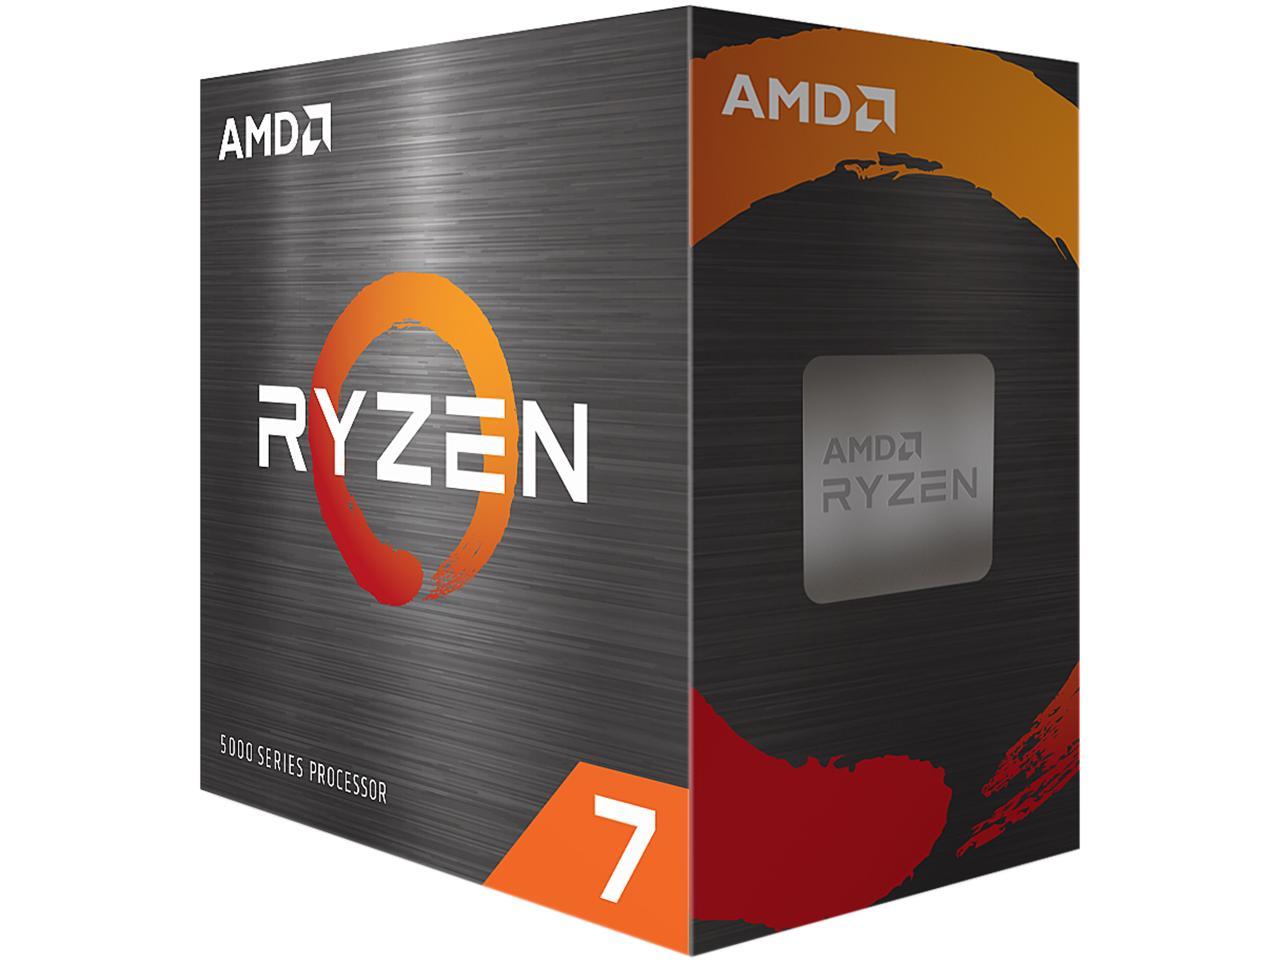 AMD Ryzen 7 5800X 3.8 GHz 8-Core AM4 Processor $334 + Free Shipping